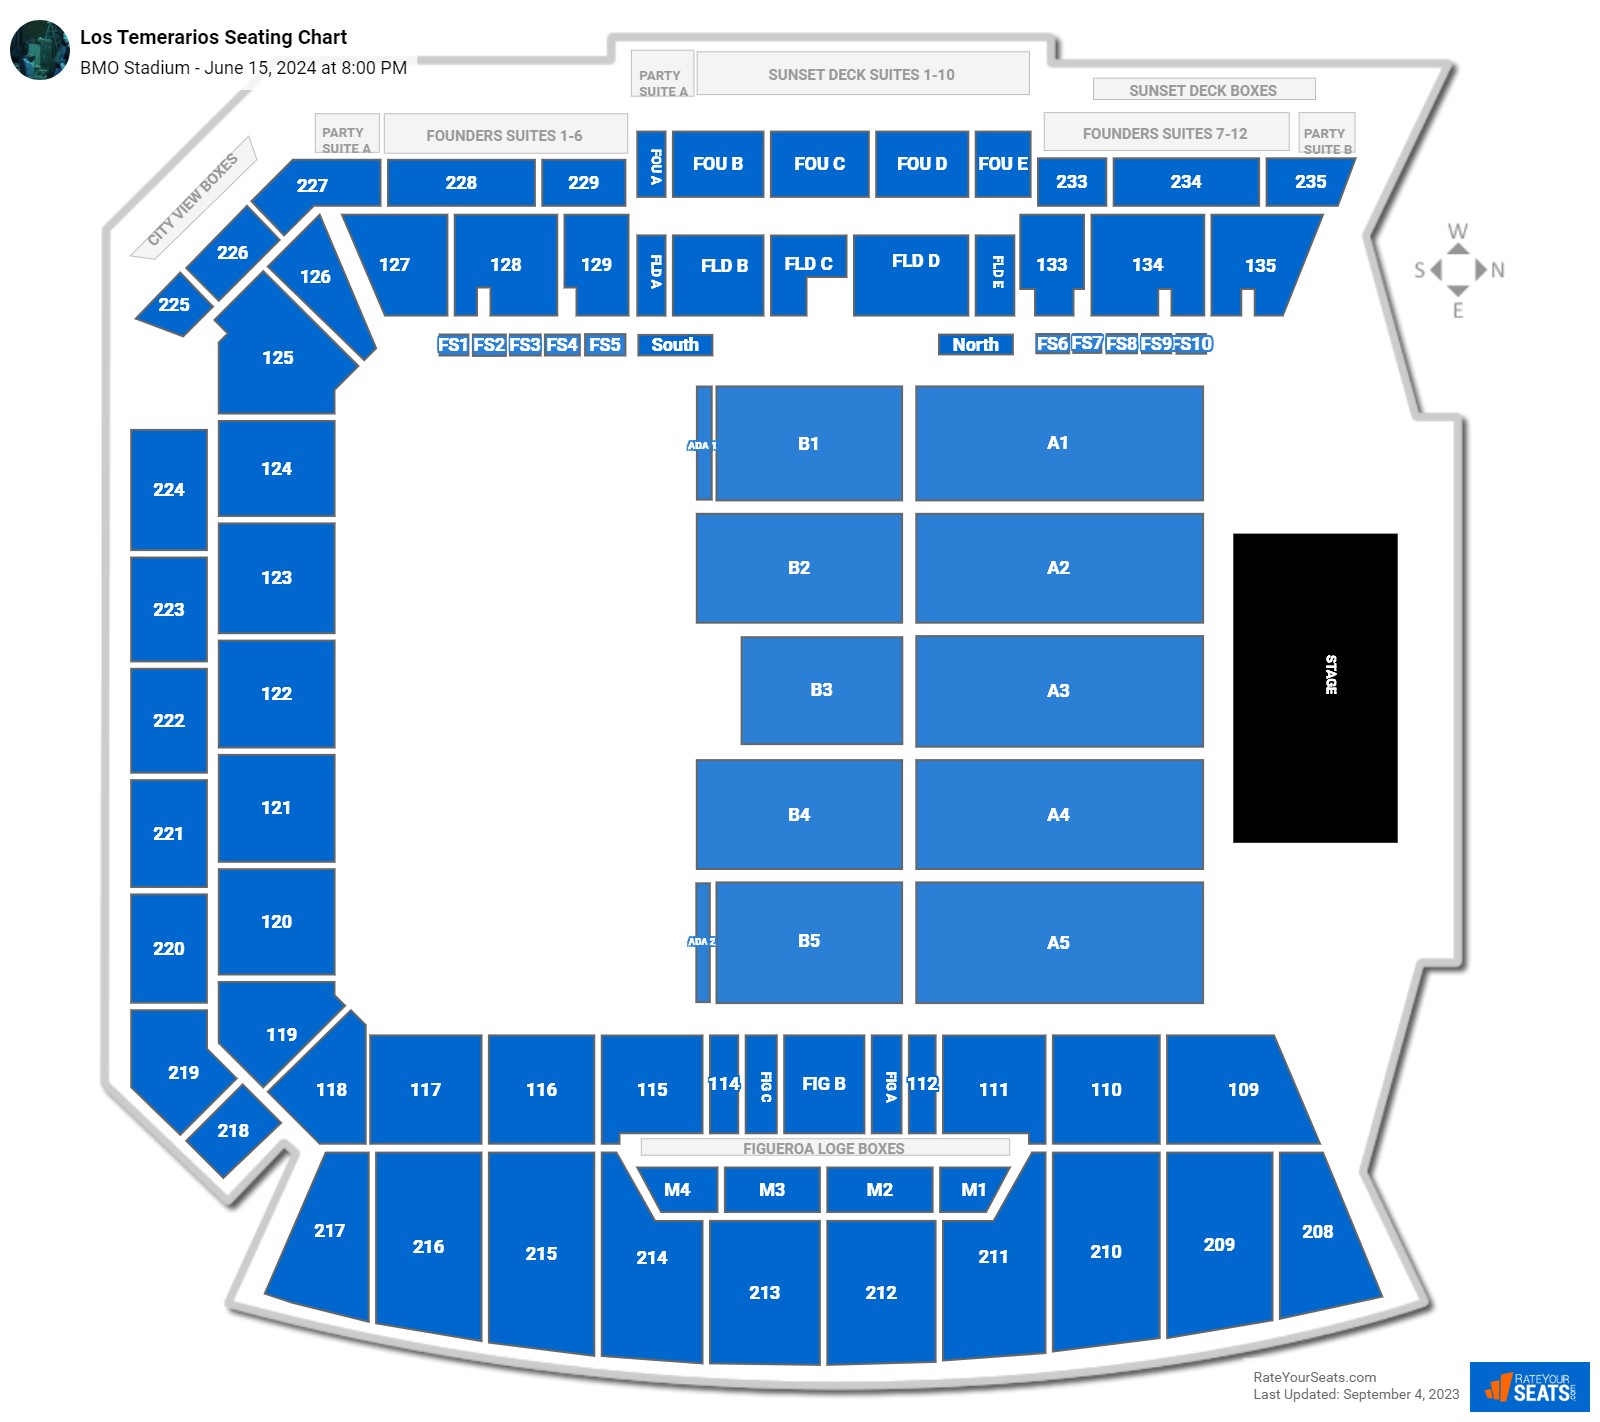 BMO Stadium Concert Seating Chart - RateYourSeats.com